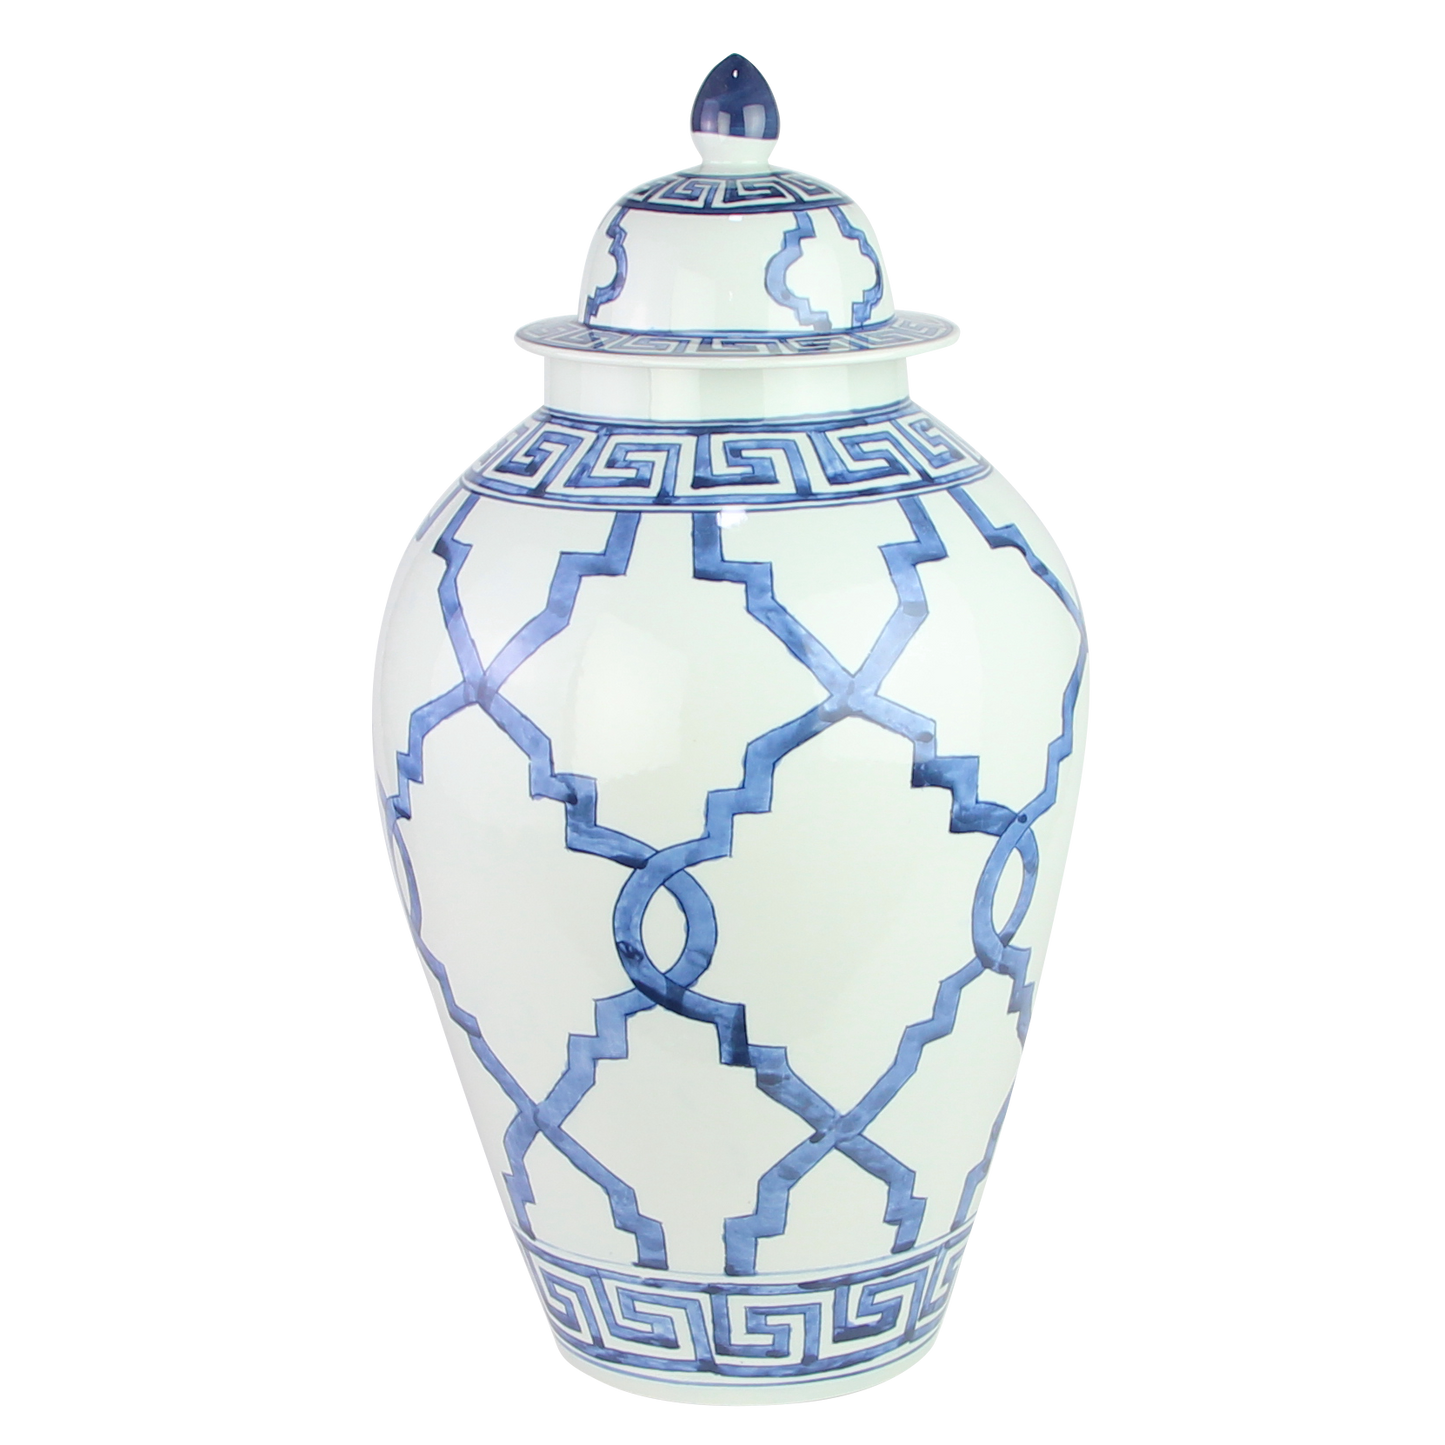 Blue and White Ceramic Jar